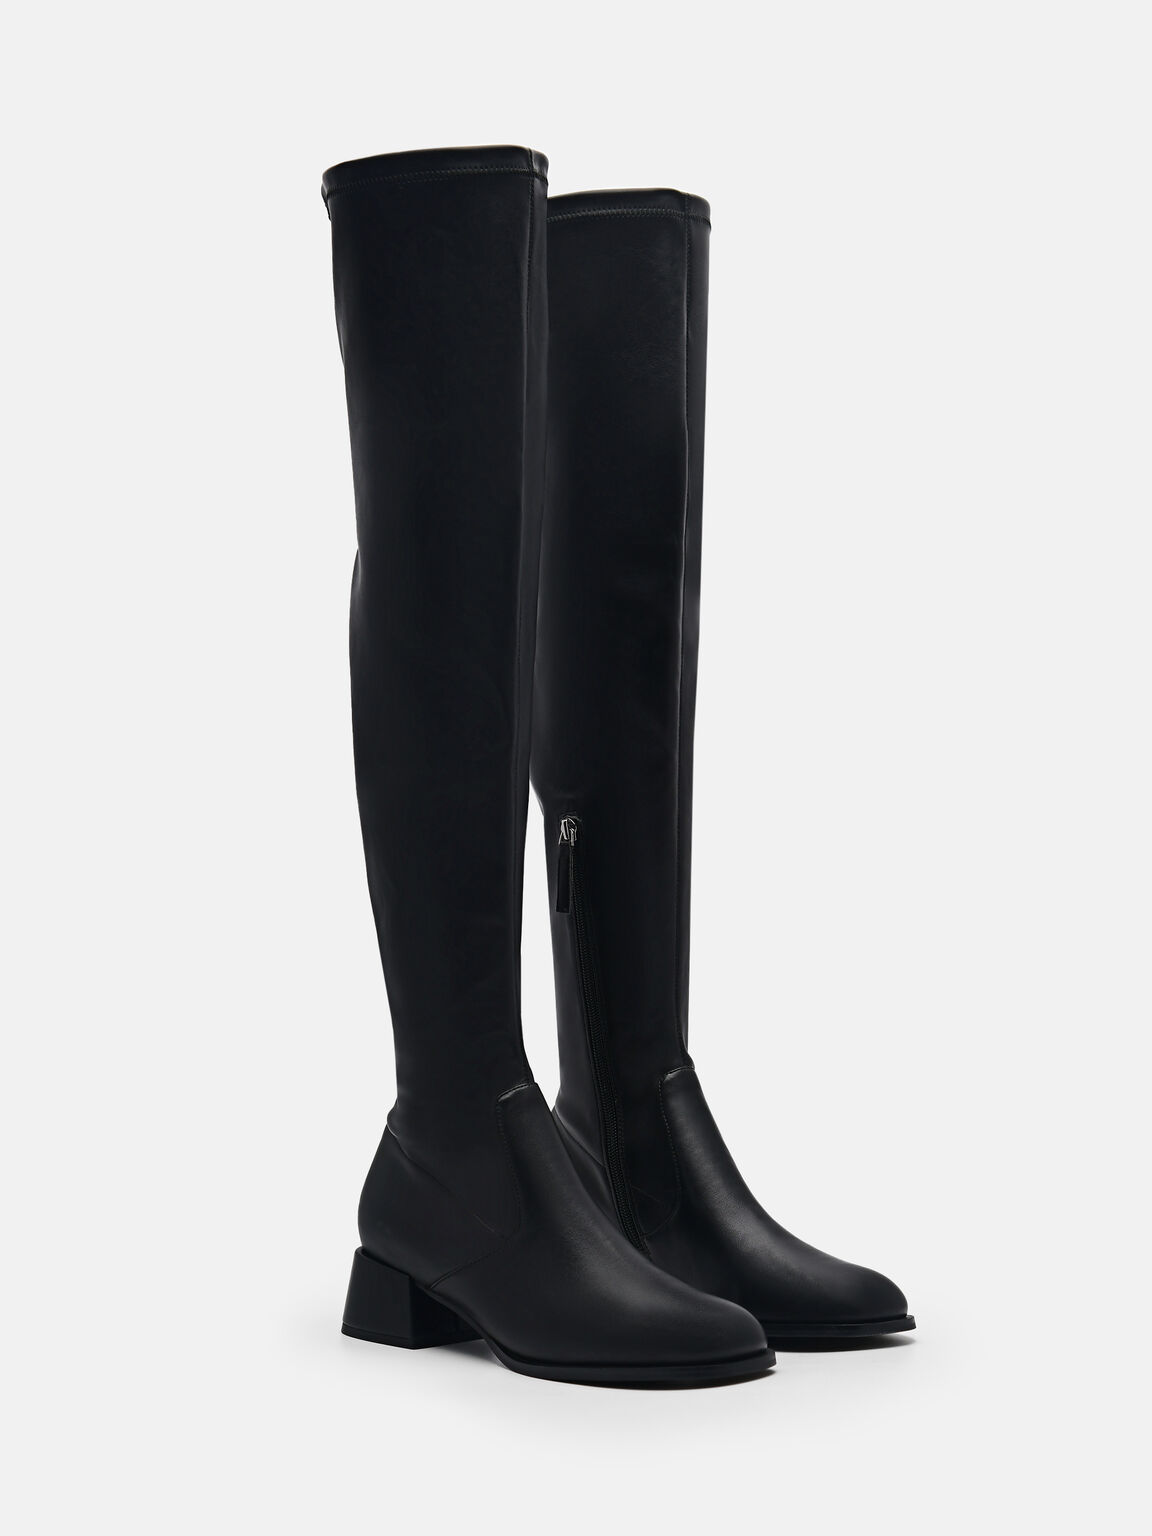 Poppy Thigh High Boots, Black, hi-res